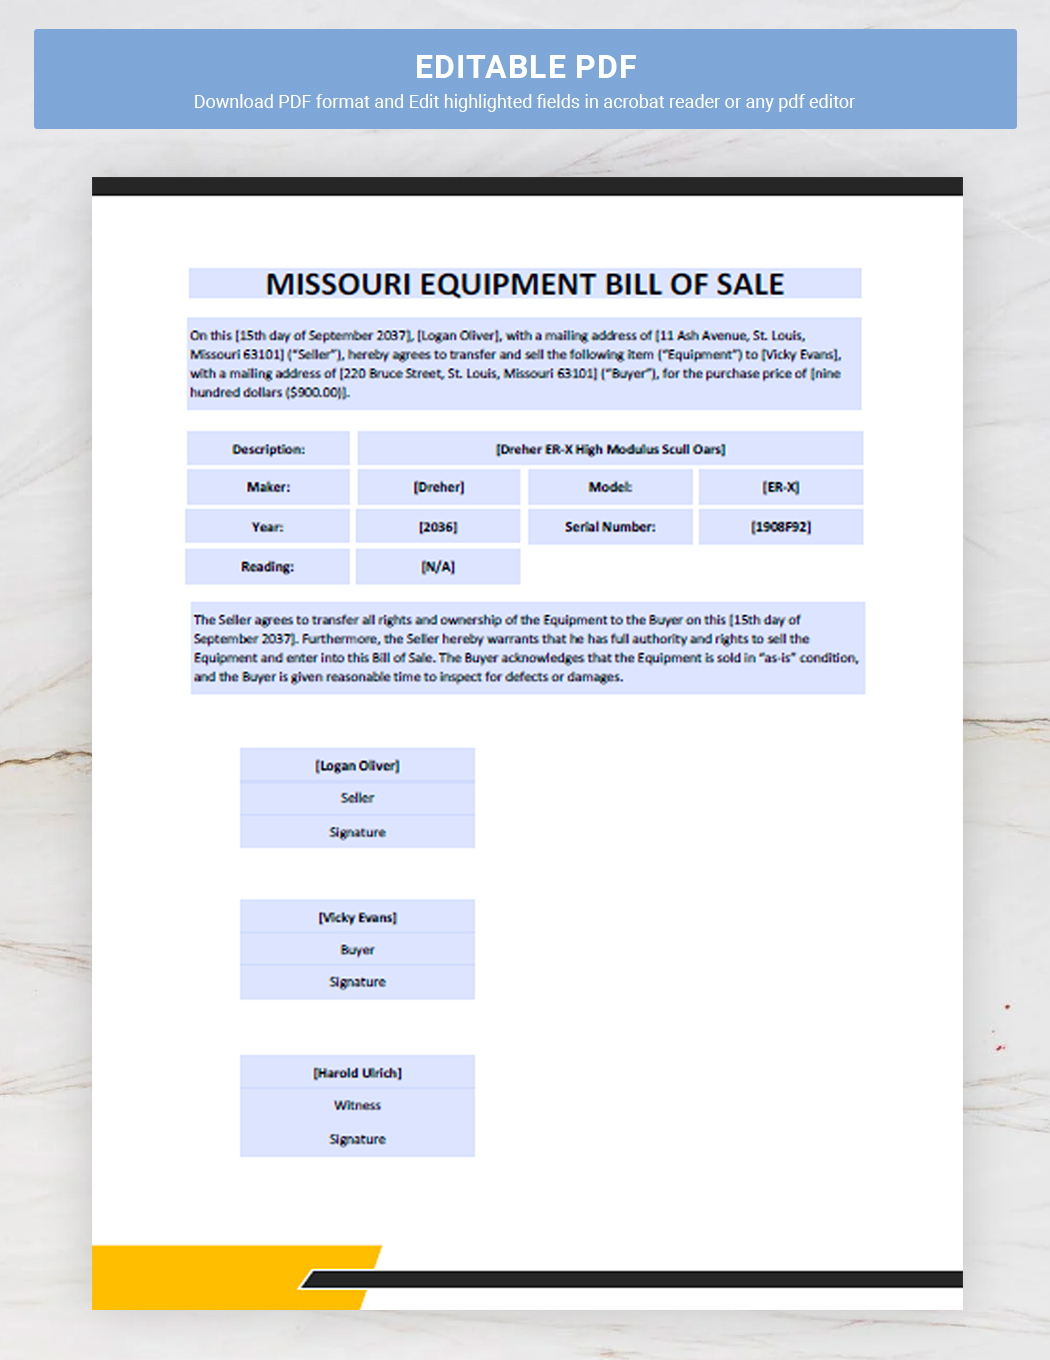 Missouri Equipment Bill of Sale Template